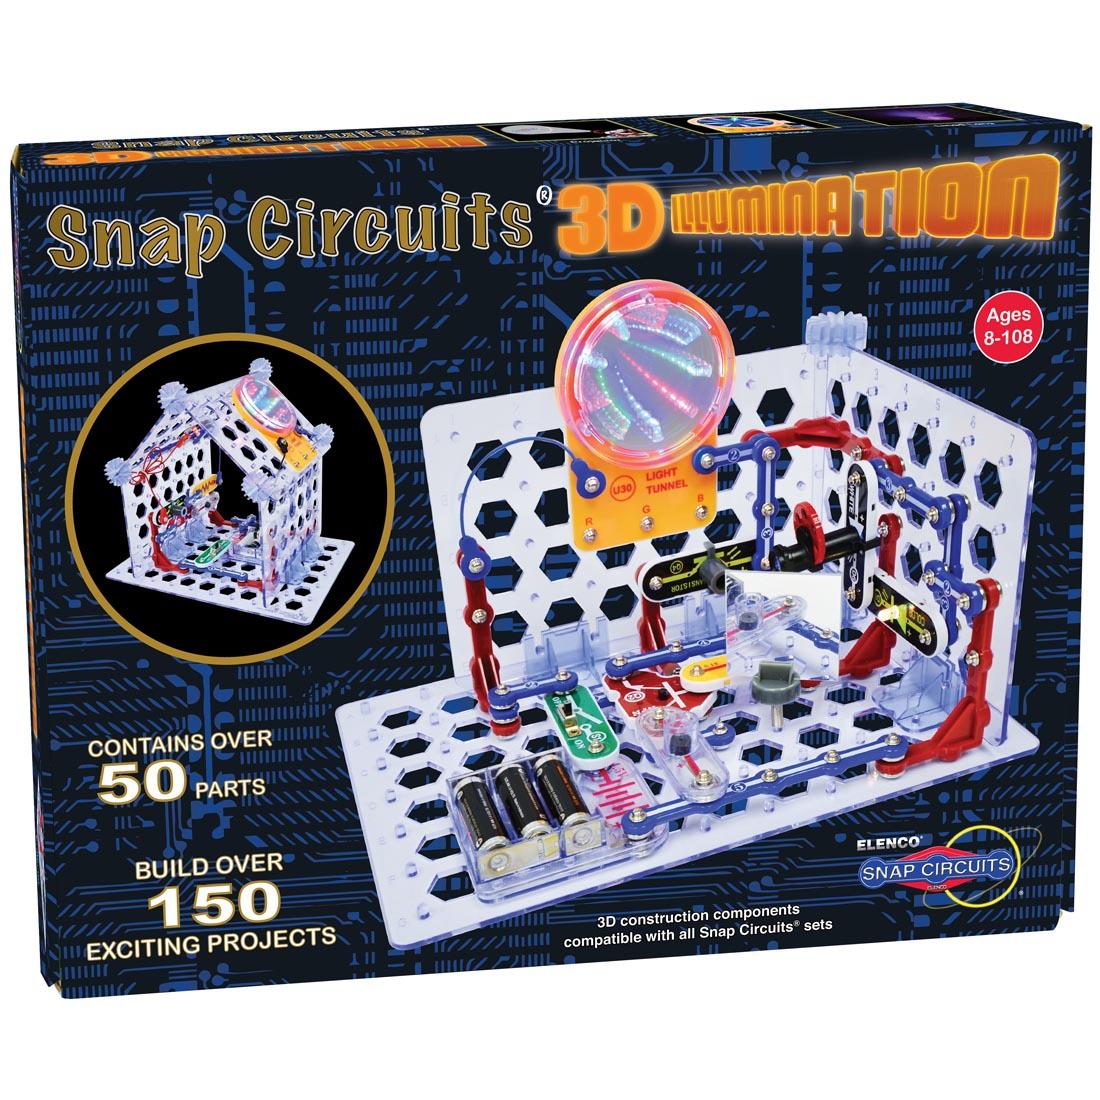 Snap Circuits 3D Illumination